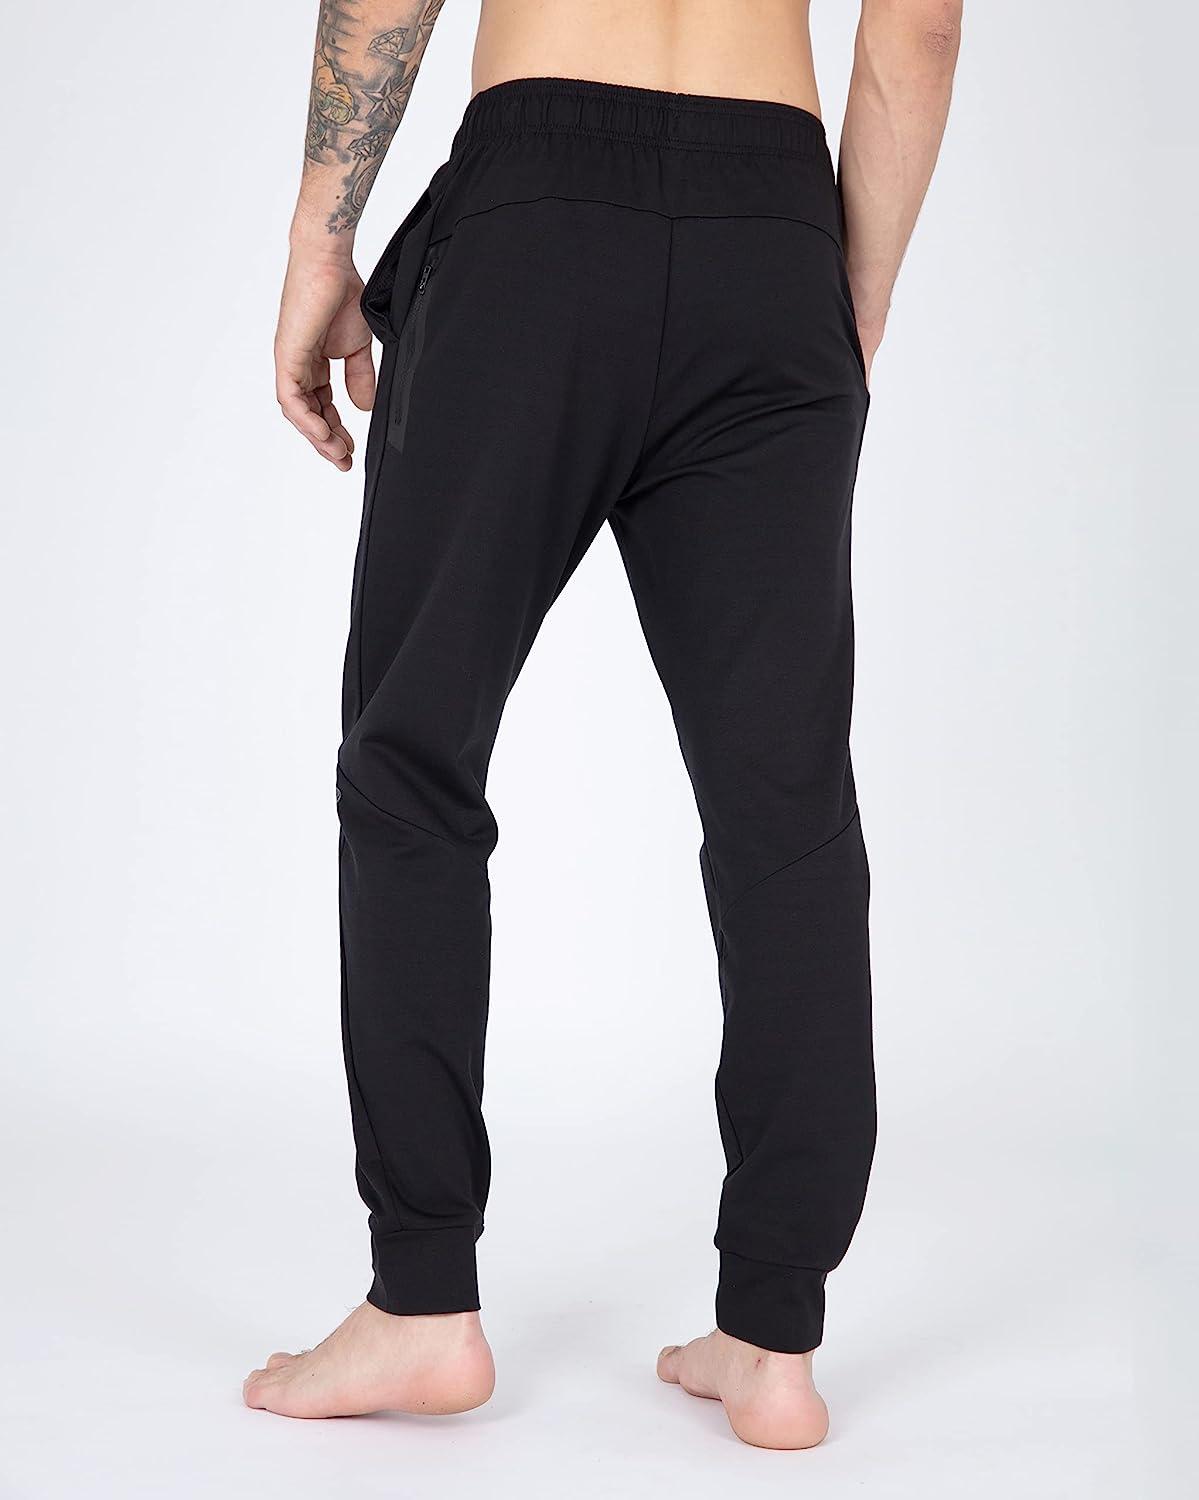 Apana Zipper Athletic Pants for Women